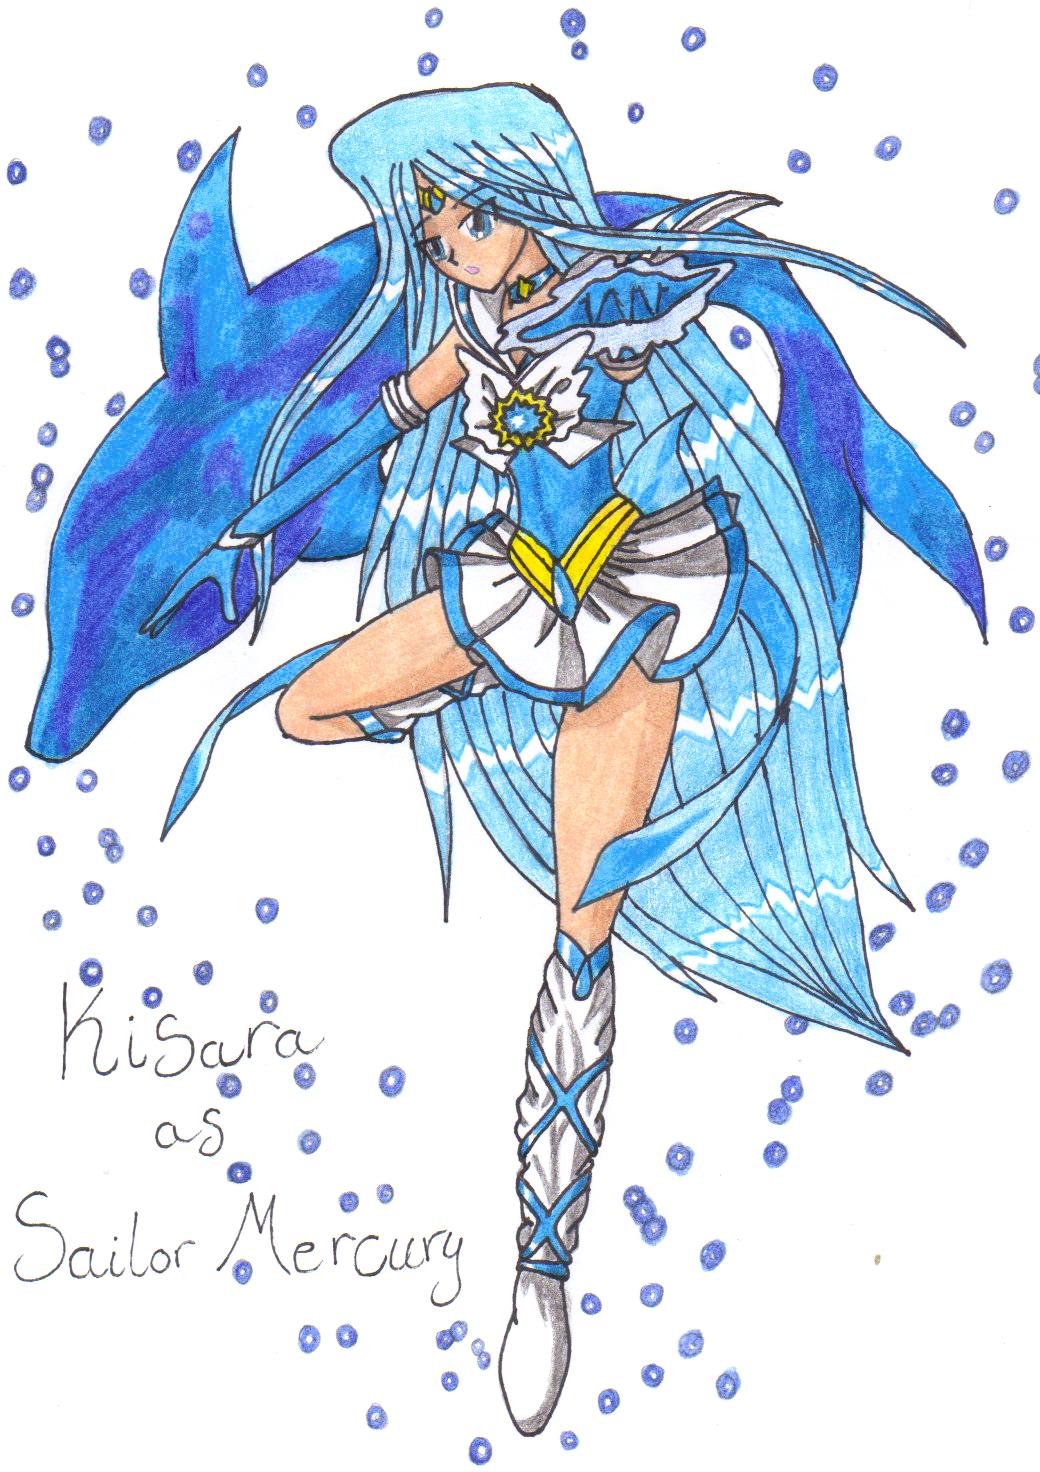 Kisara as Sailor Mercury by setoXyamiKaiba4ever